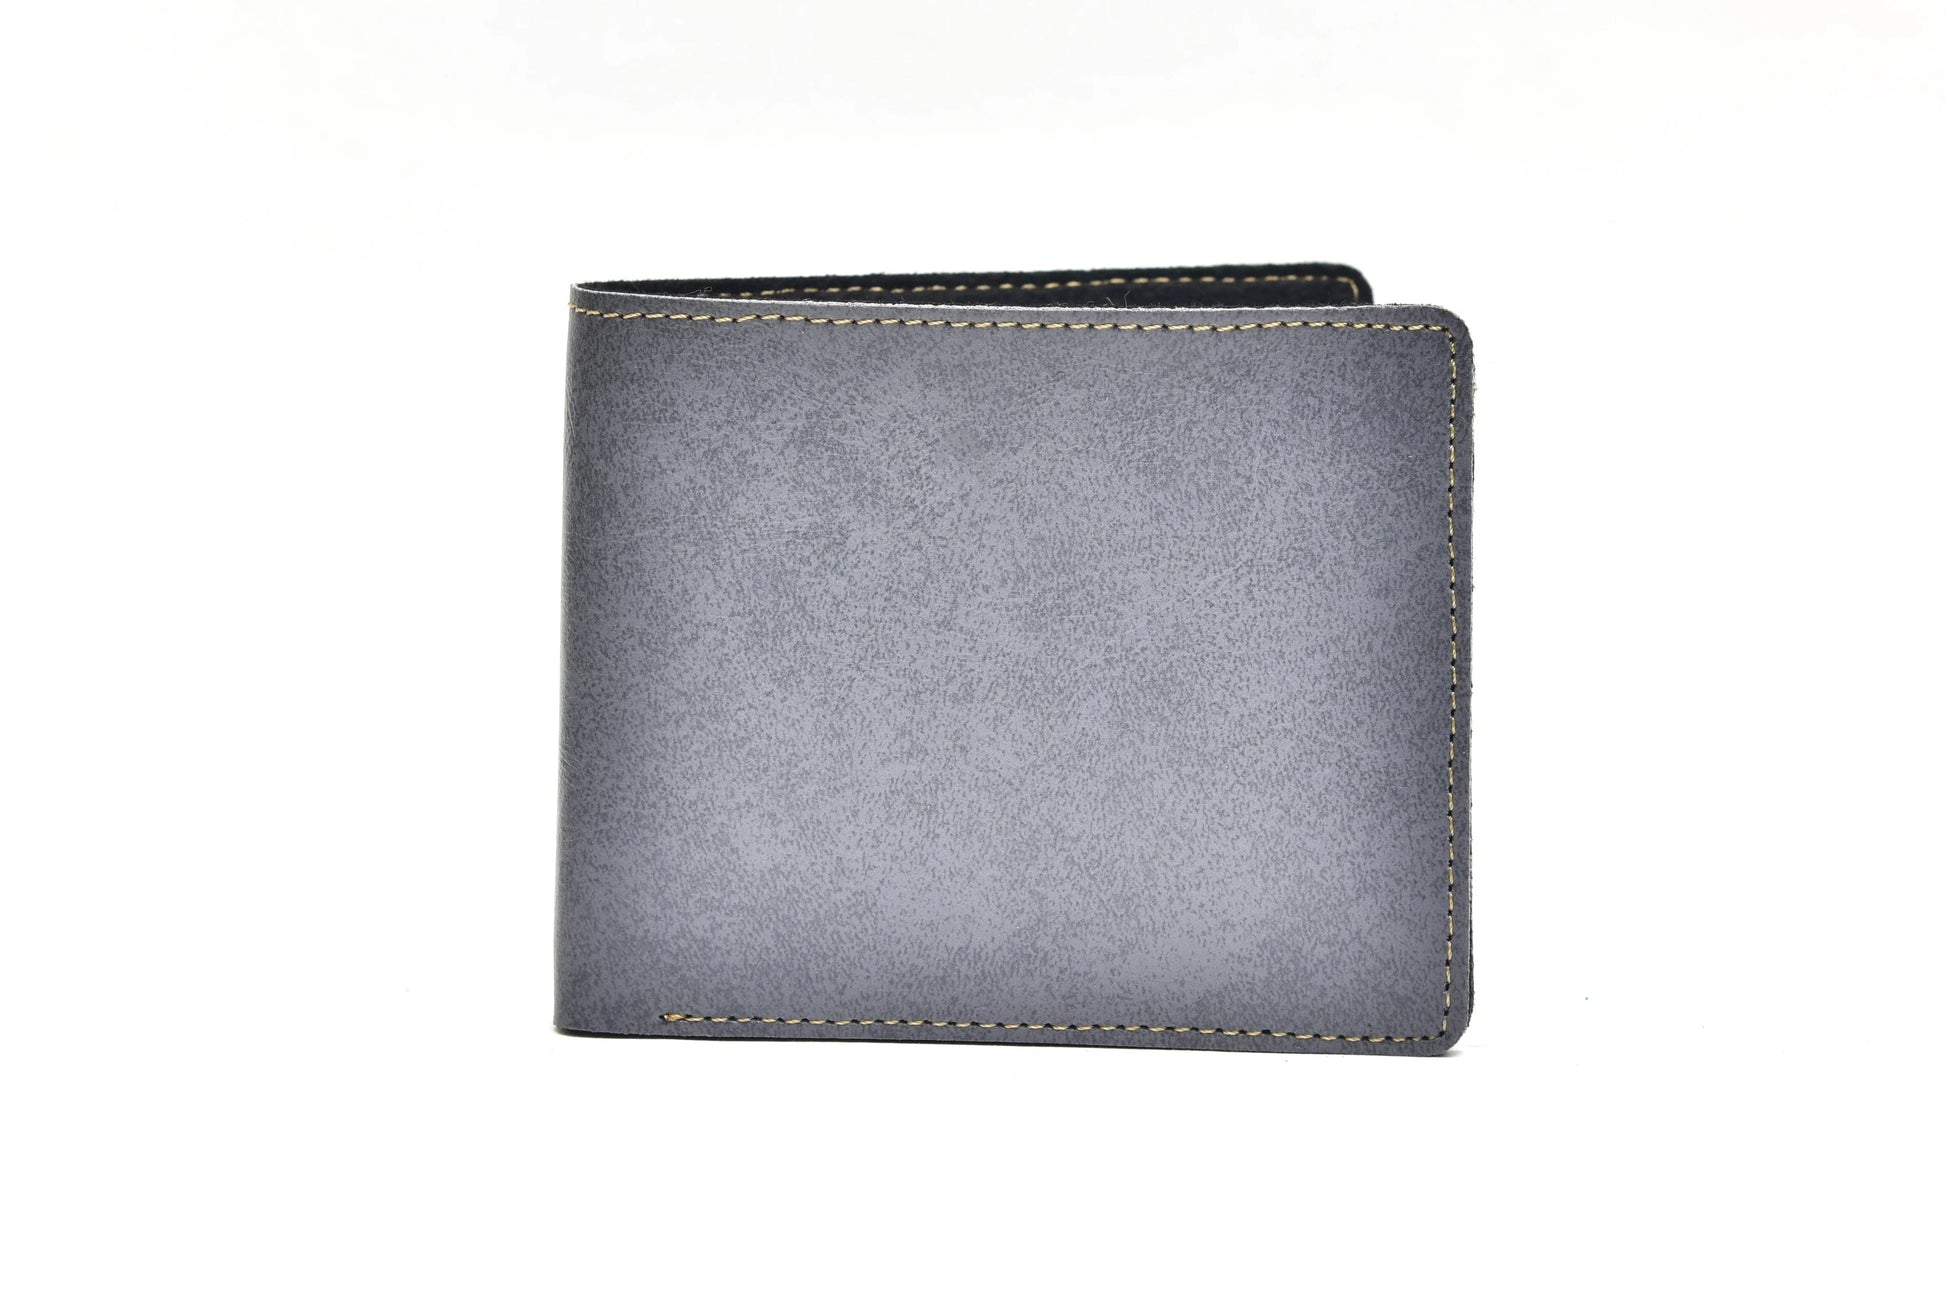 Back view of grey men's wallet